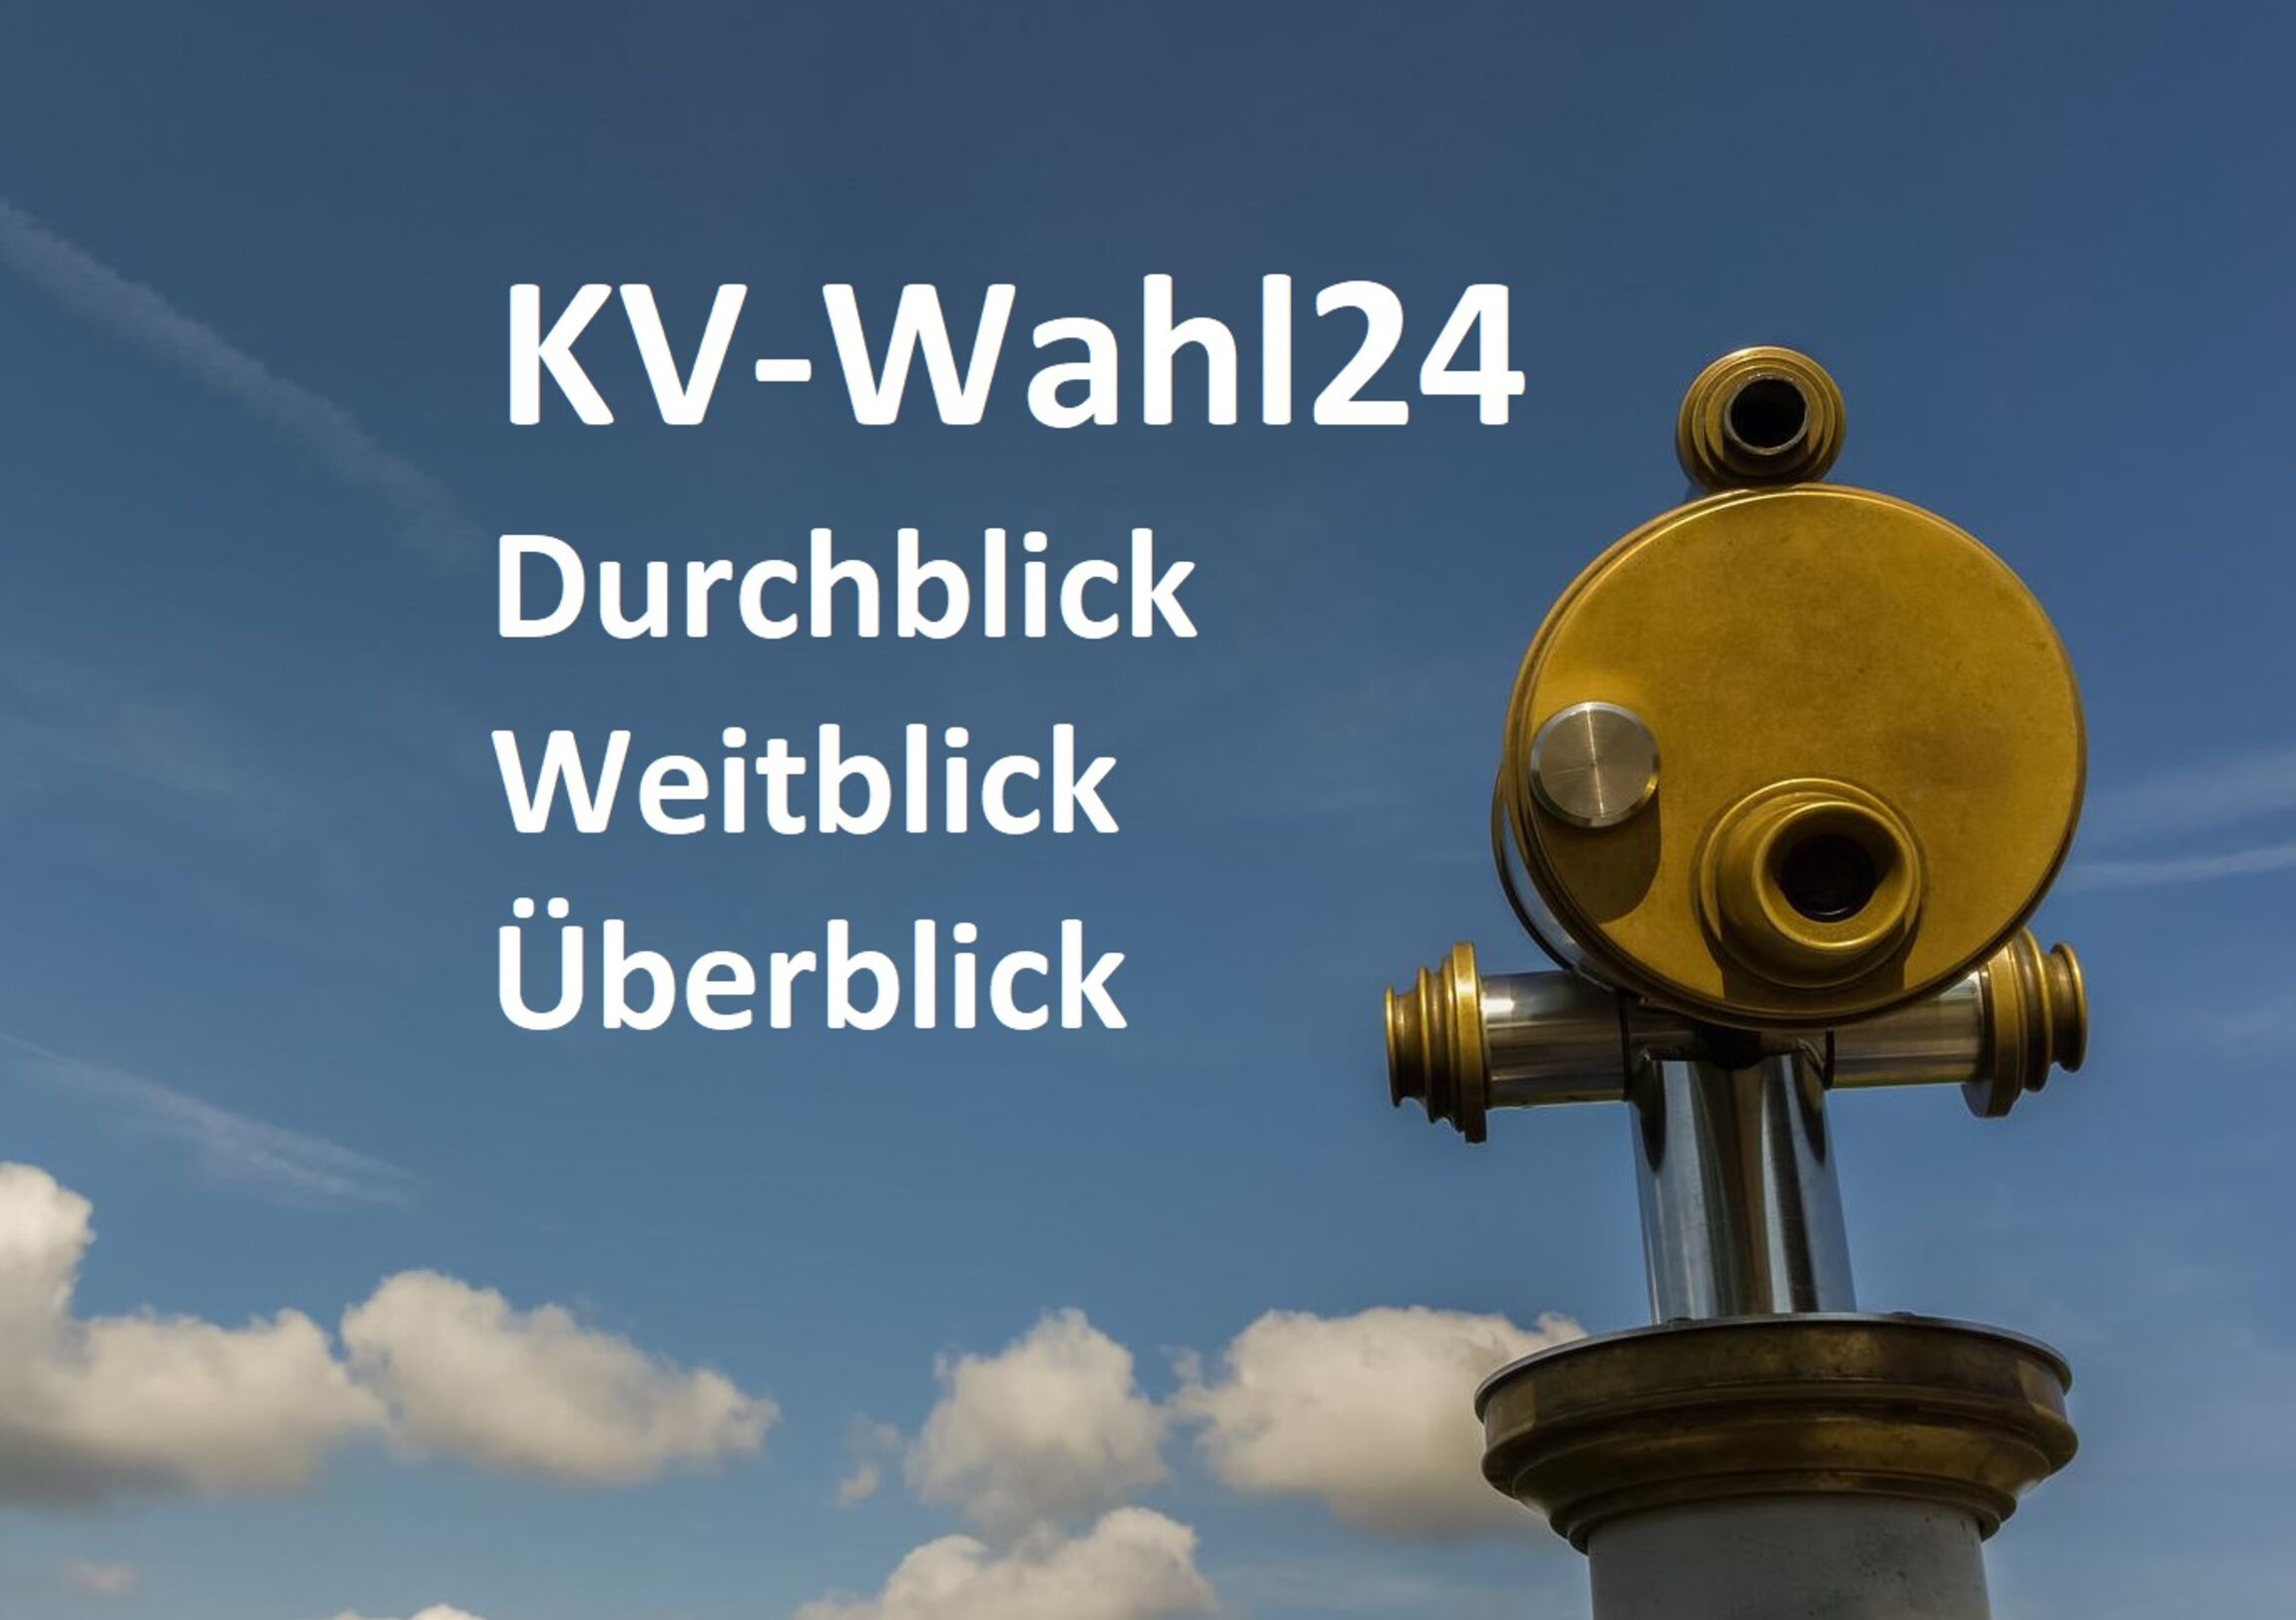 KV-Wahl24 Onlineveranstaltung